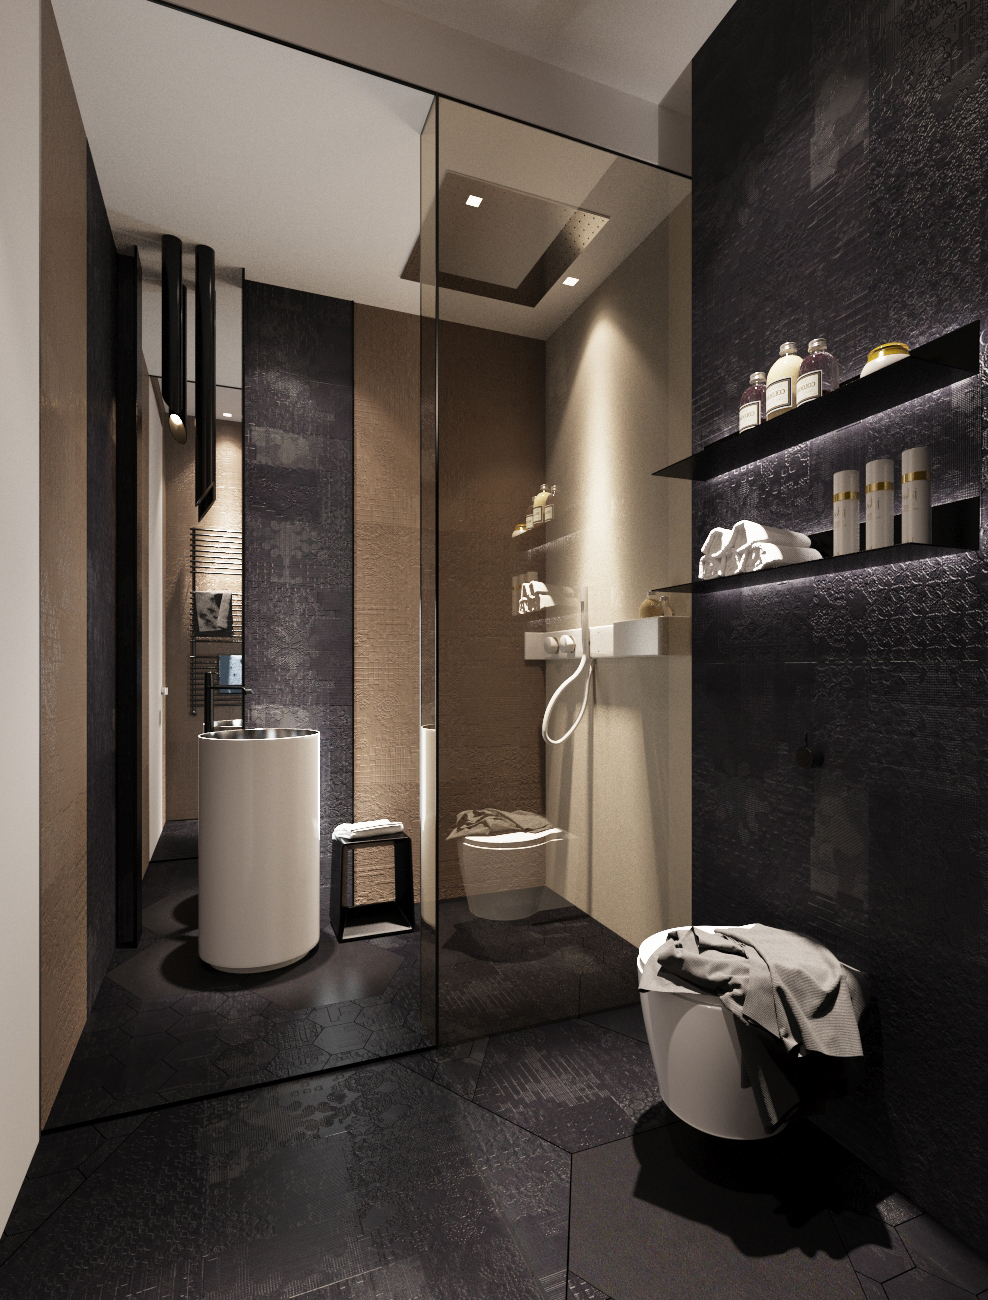 dark modern bathroom decor "width =" 988 "height =" 1300 "srcset =" https://mileray.com/wp-content/uploads/2020/05/1588516318_819_Applying-Modern-Bathroom-Decor-With-Creative-and-Perfect-Decorating-Which.jpg 988w, https://mileray.com / wp-content / uploads / 2016/09 / Artem-Trigubchak1-228x300.jpg 228w, https://mileray.com/wp-content/uploads/2016/09/Artem-Trigubchak1-768x1011.jpg 768w, https: / / mileray.com/wp-content/uploads/2016/09/Artem-Trigubchak1-778x1024.jpg 778w, https://mileray.com/wp-content/uploads/2016/09/Artem-Trigubchak1-696x916.jpg 696w, https://mileray.com/wp-content/uploads/2016/09/Artem-Trigubchak1-319x420.jpg 319w "sizes =" (maximum width: 988px) 100vw, 988px